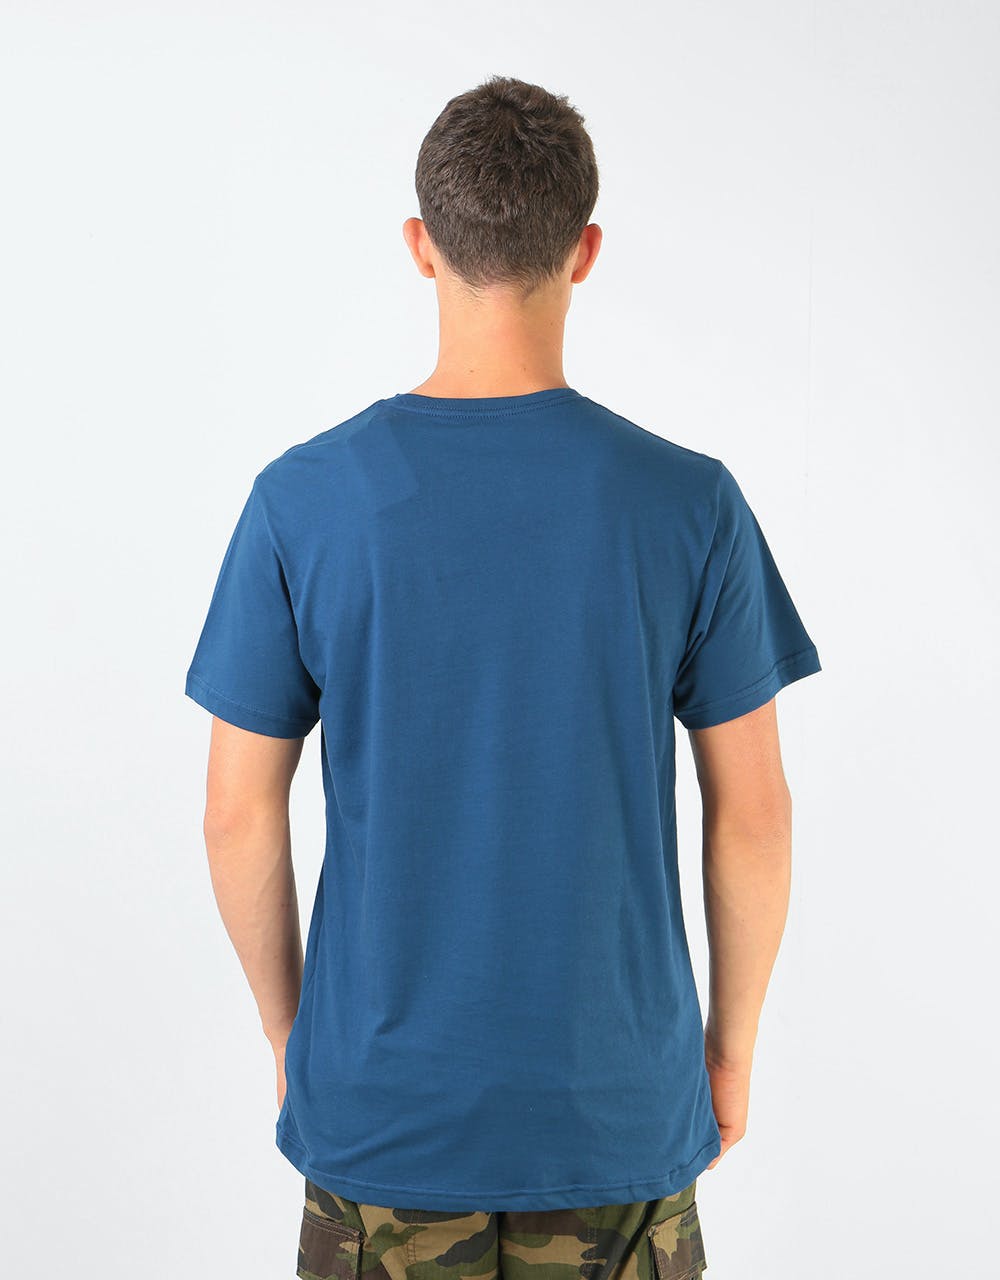 Patagonia Fitz Roy Bear Organic T-Shirt - Stone Blue